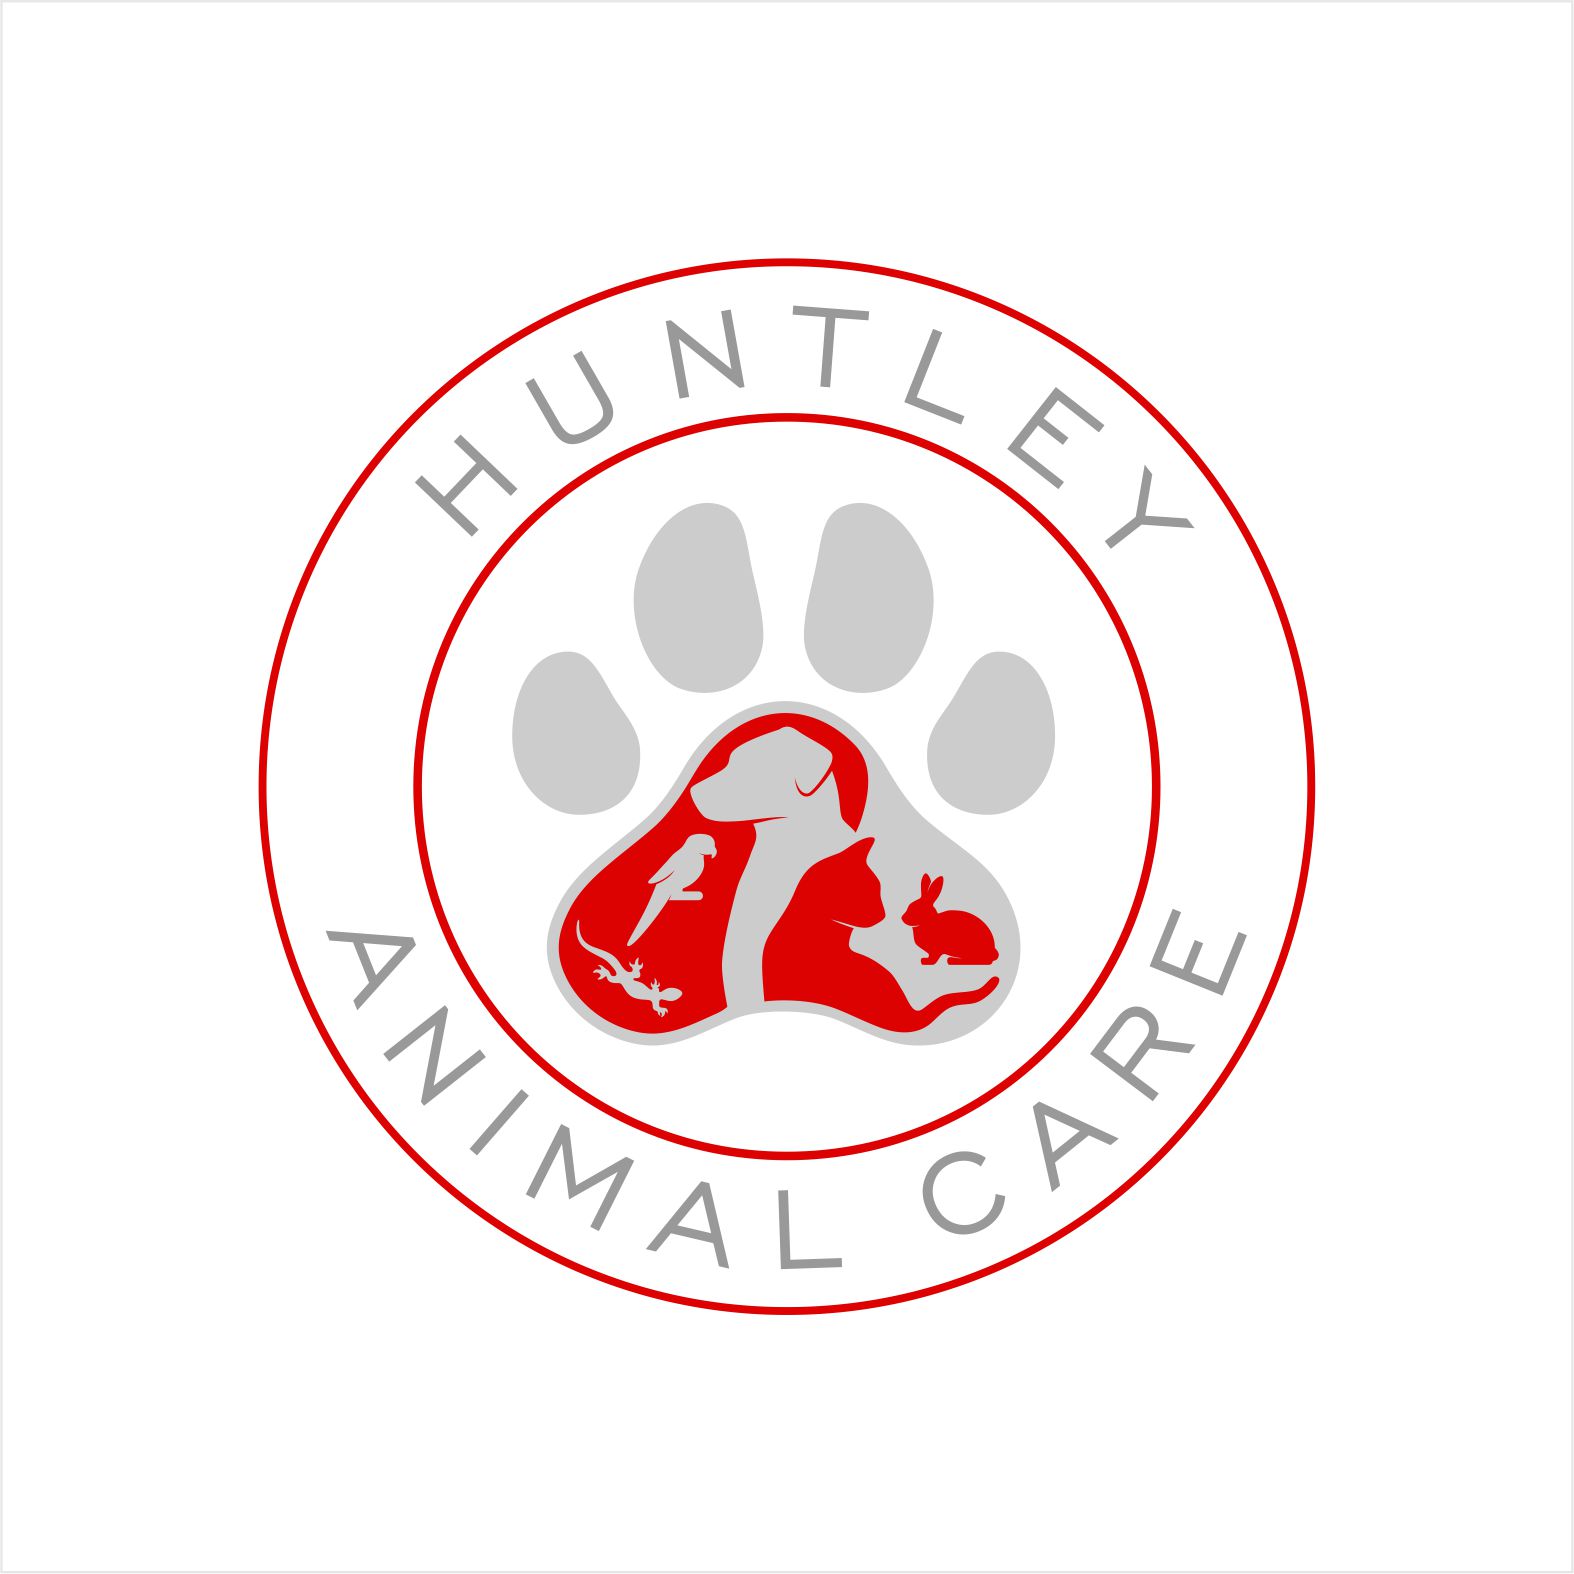 Huntley Animal Care